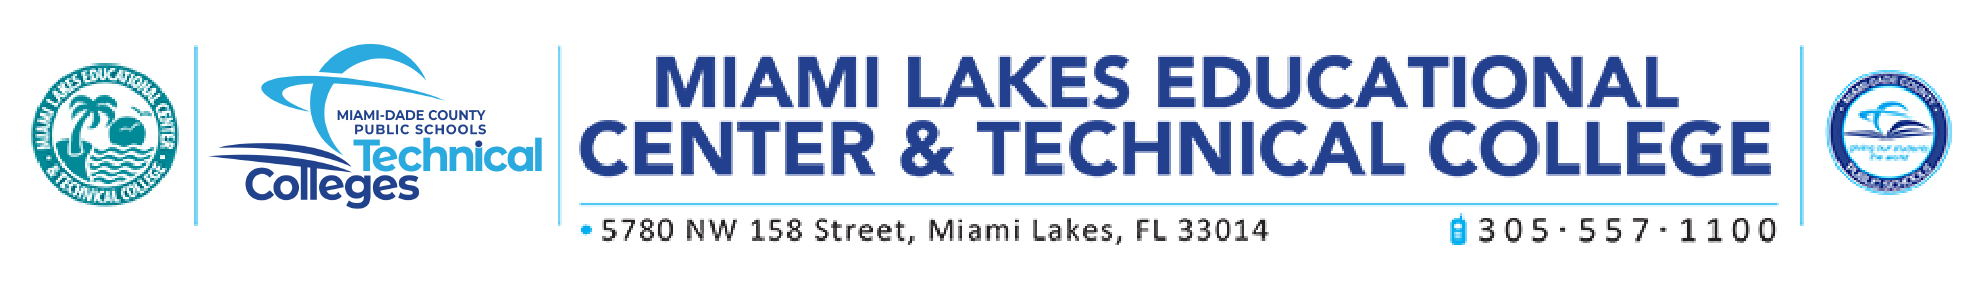 Miami Lakes Educational Center Technical College - Home Facebook